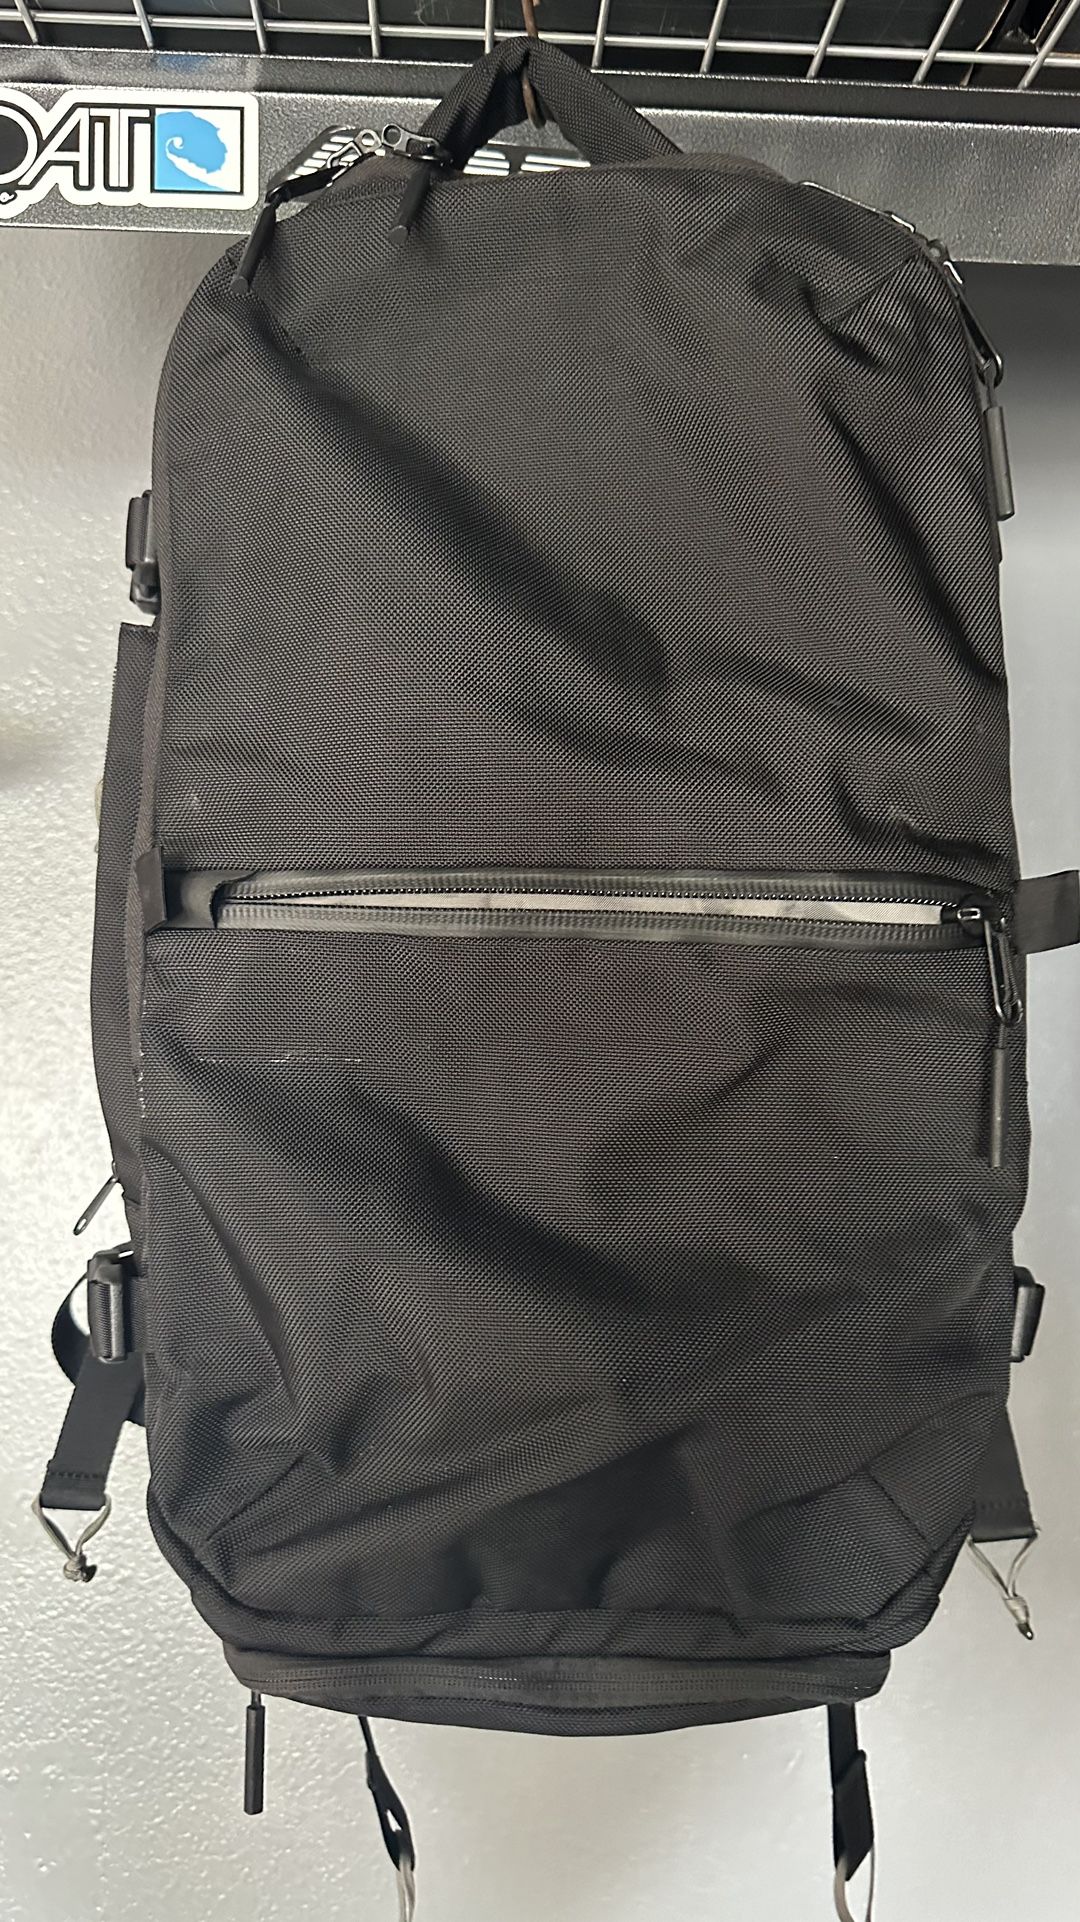 Backpack / Travel / School Bag